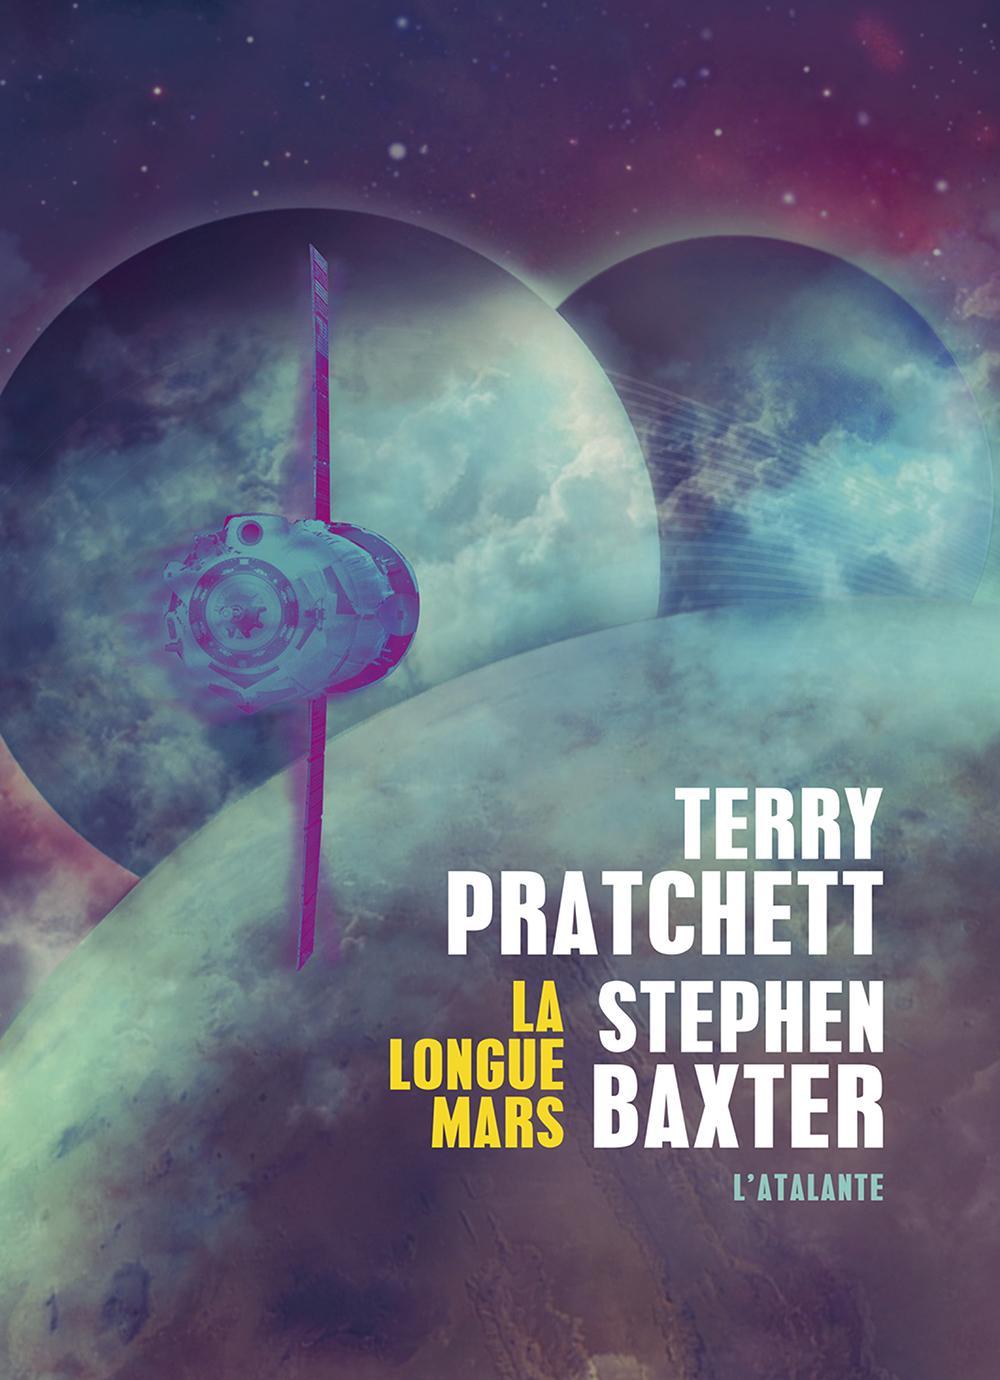 Stephen Baxter, Terry Pratchett: La Longue Mars (French language, 2015)